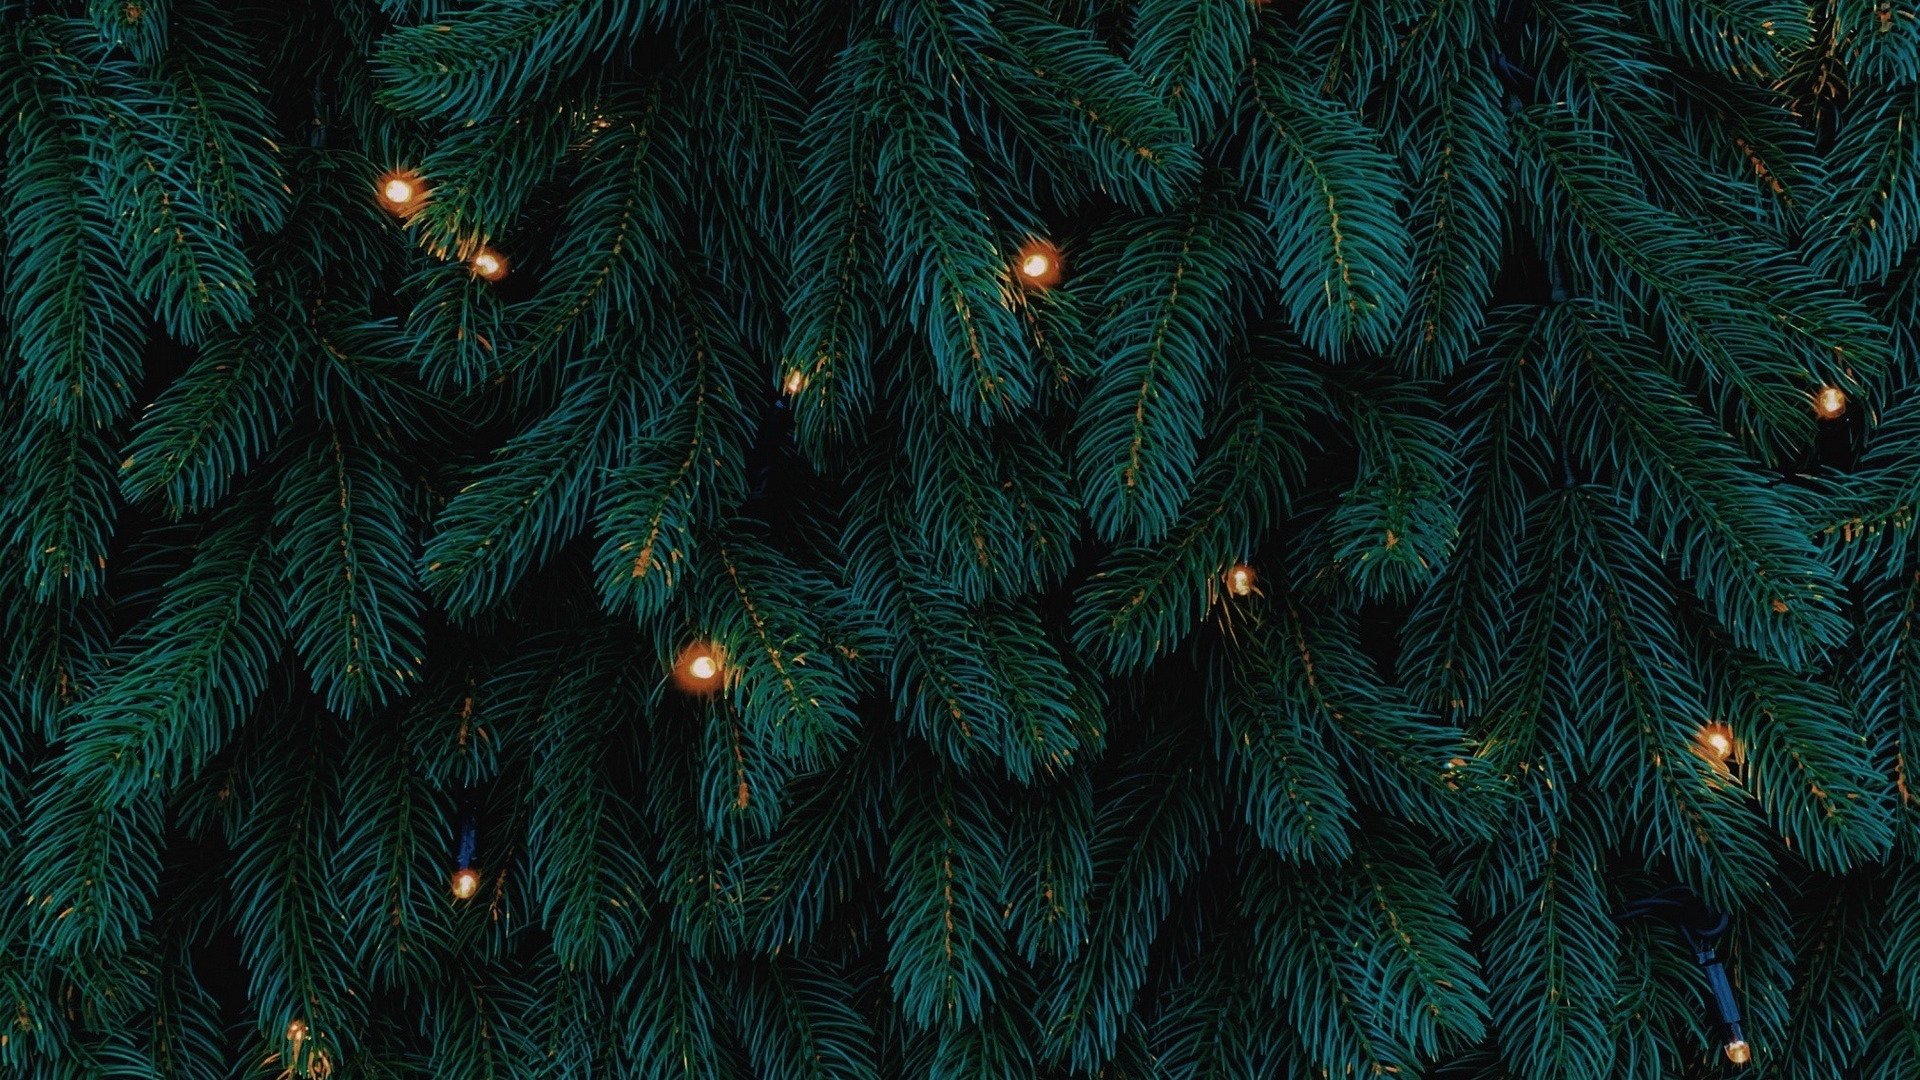 Nature Trees Branch Needles Pine Trees Lights Christmas Lights Wallpaper:1920x1080